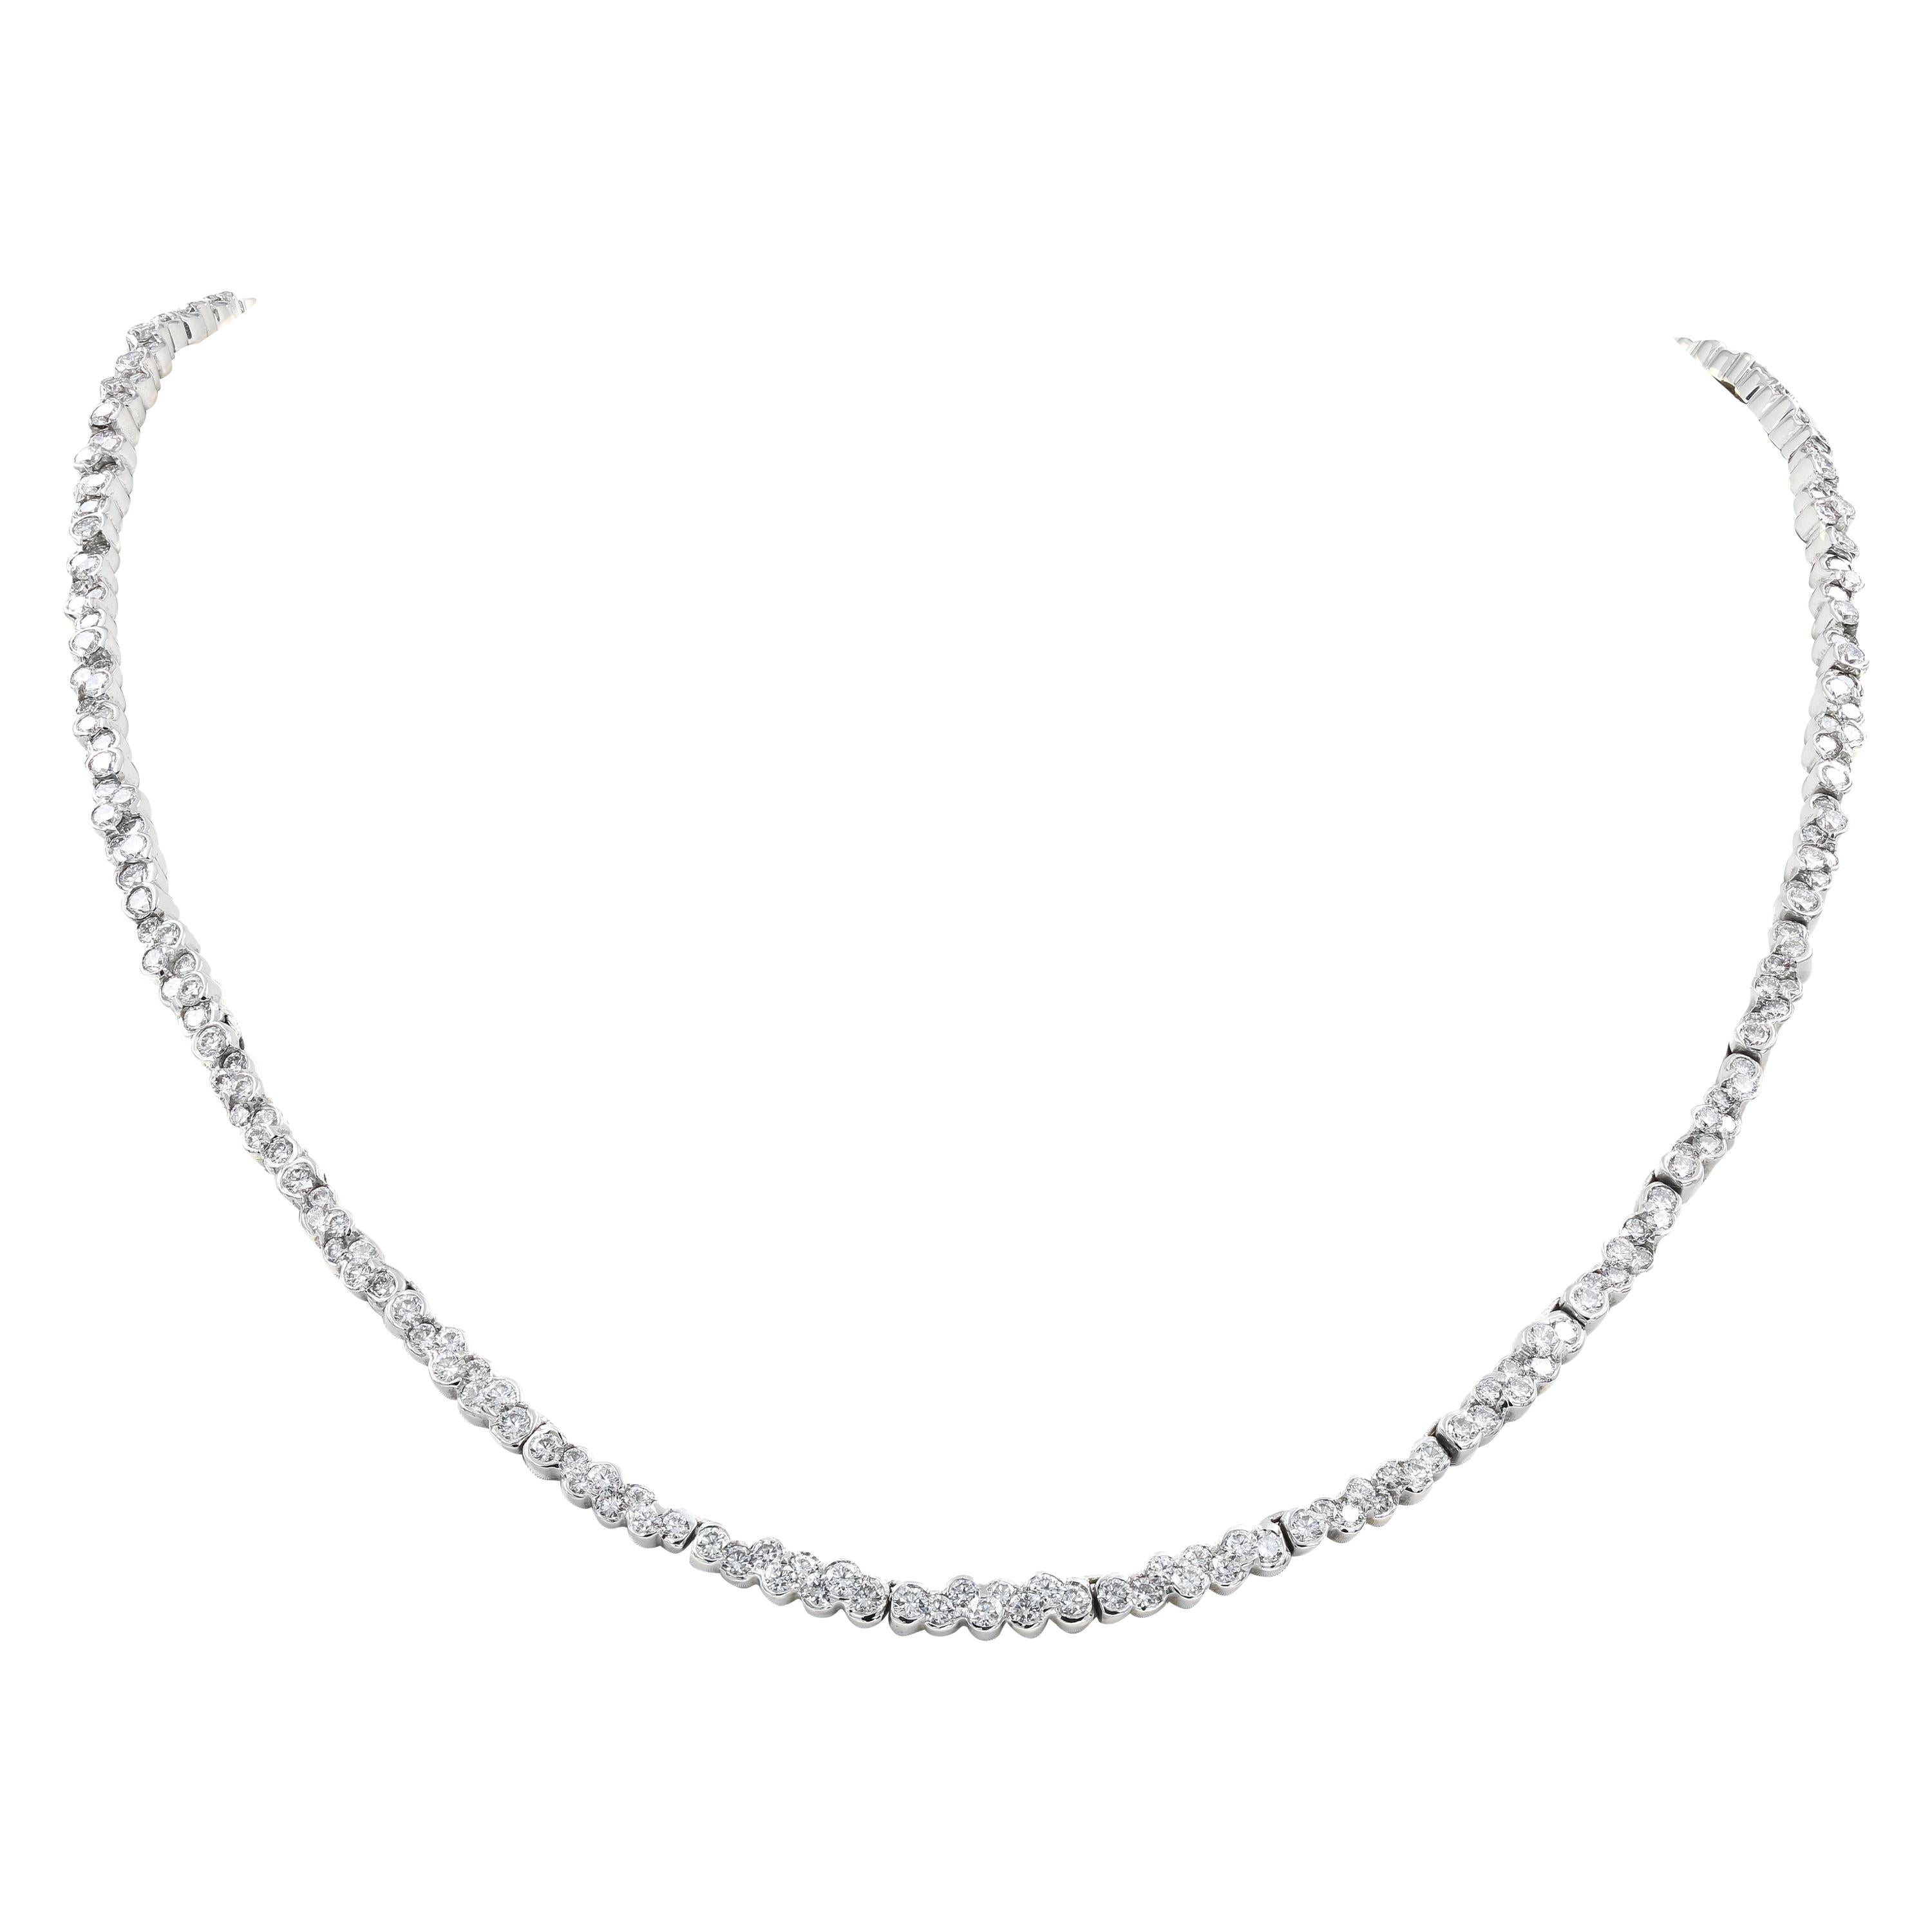 Lester Lampert Original CumuLLus Cellebration Diamond Necklace in 18 Karat WG